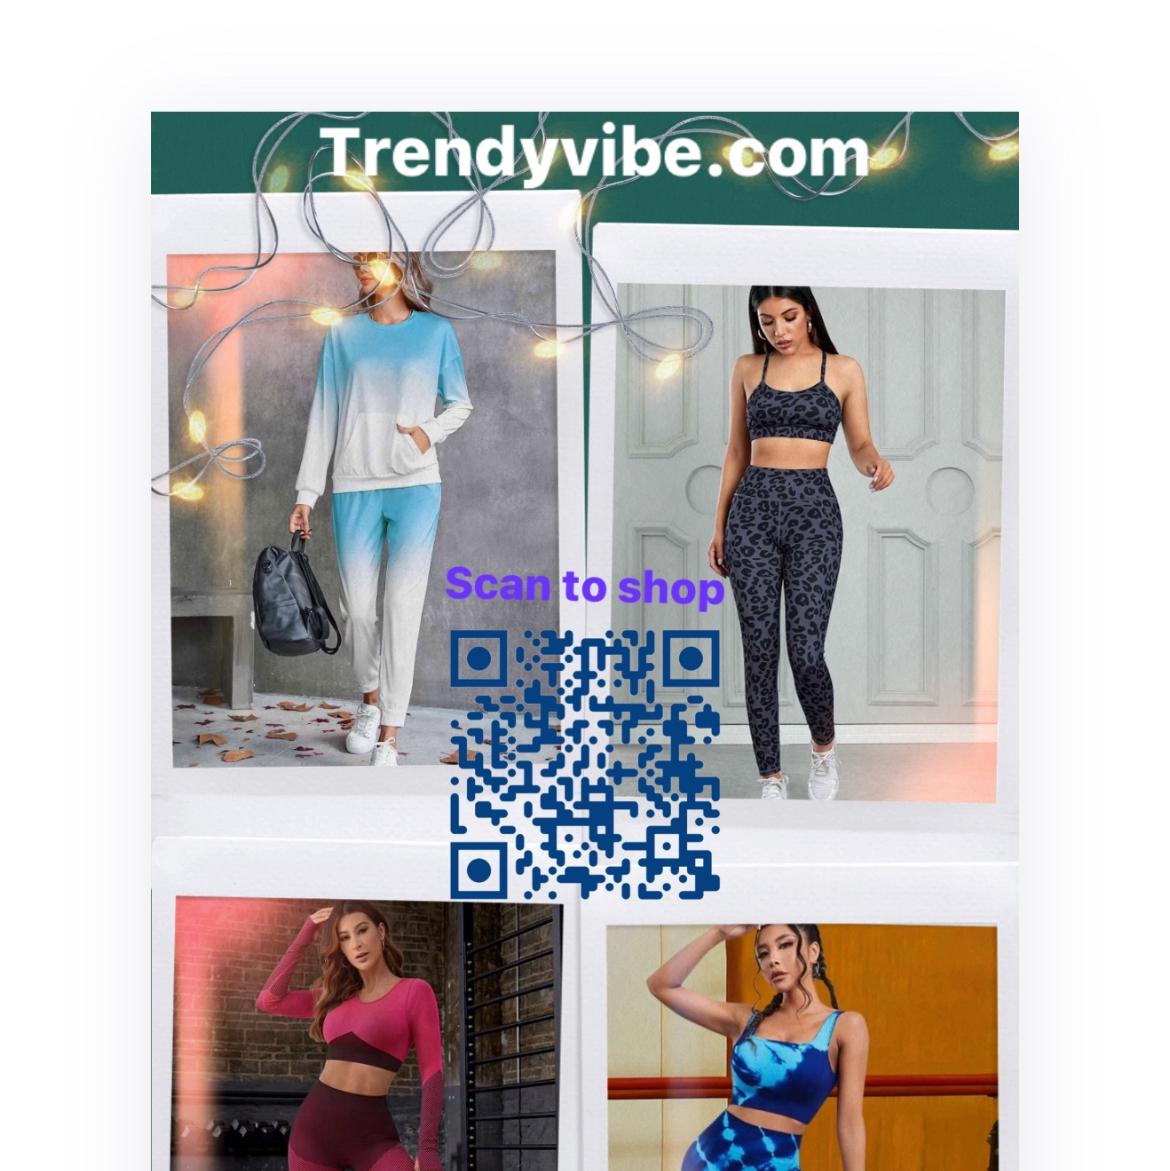 Trendyvibe.com's images